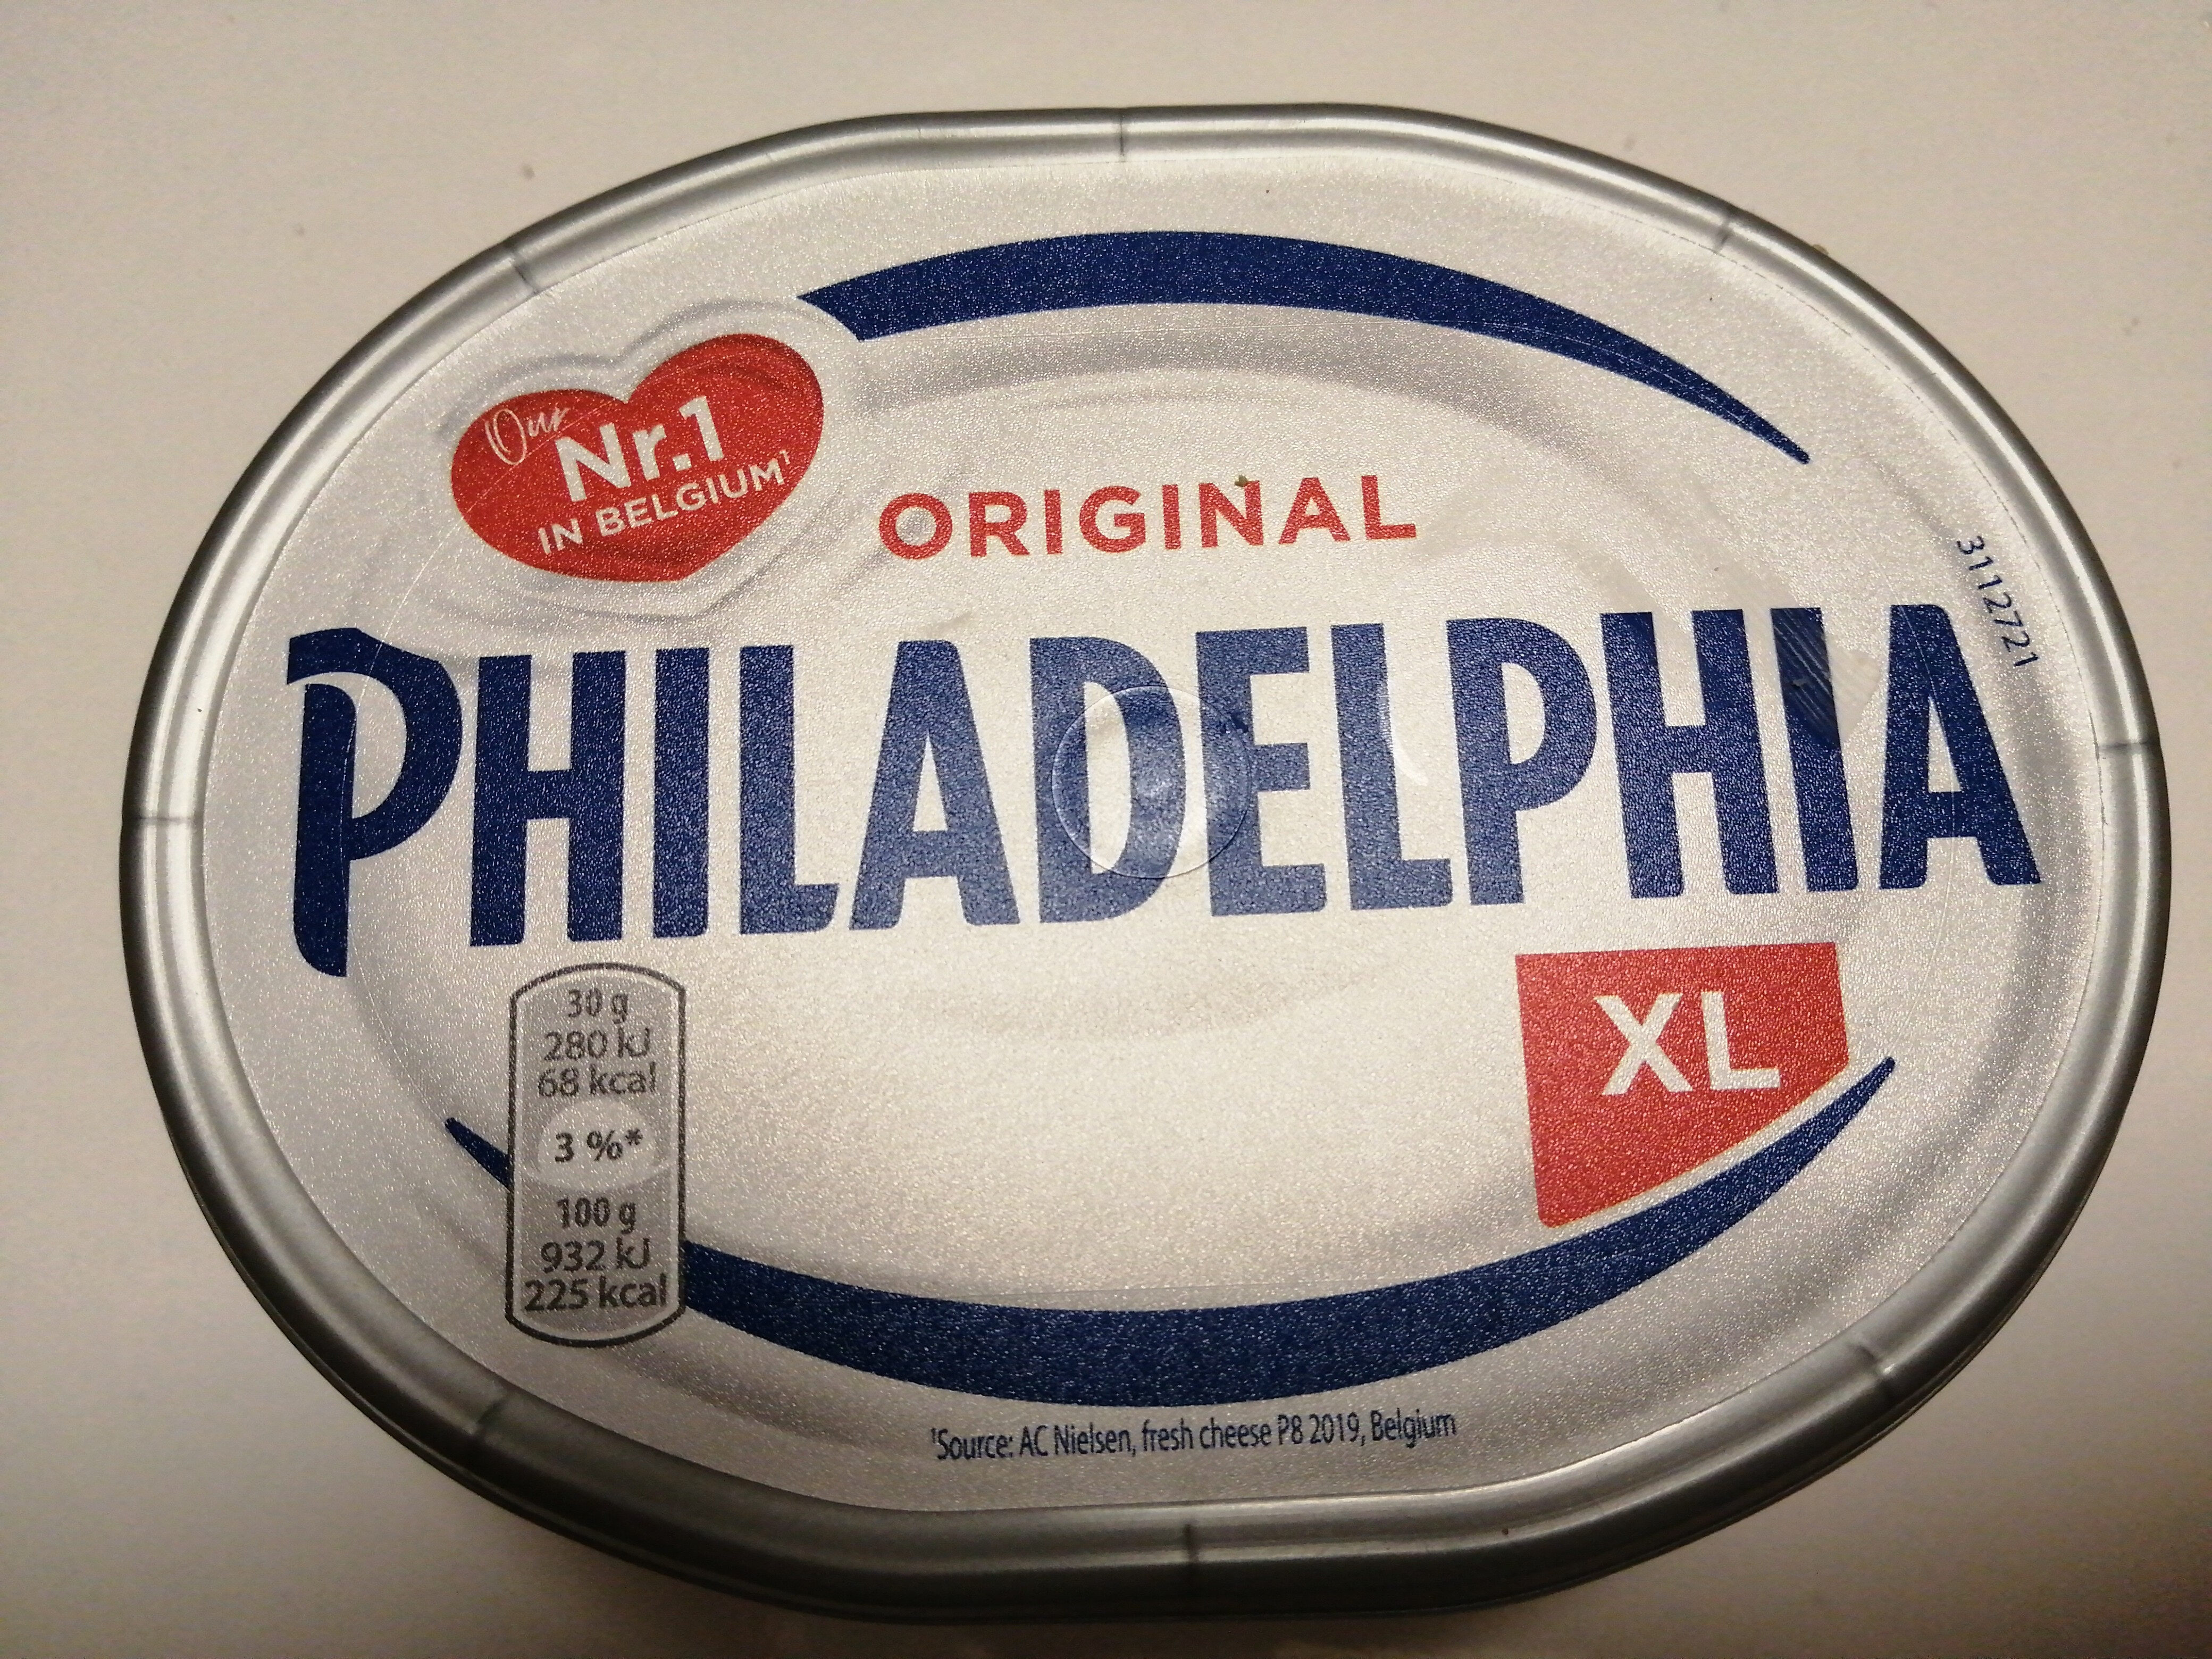 Original Philadelphia XL - Product - en